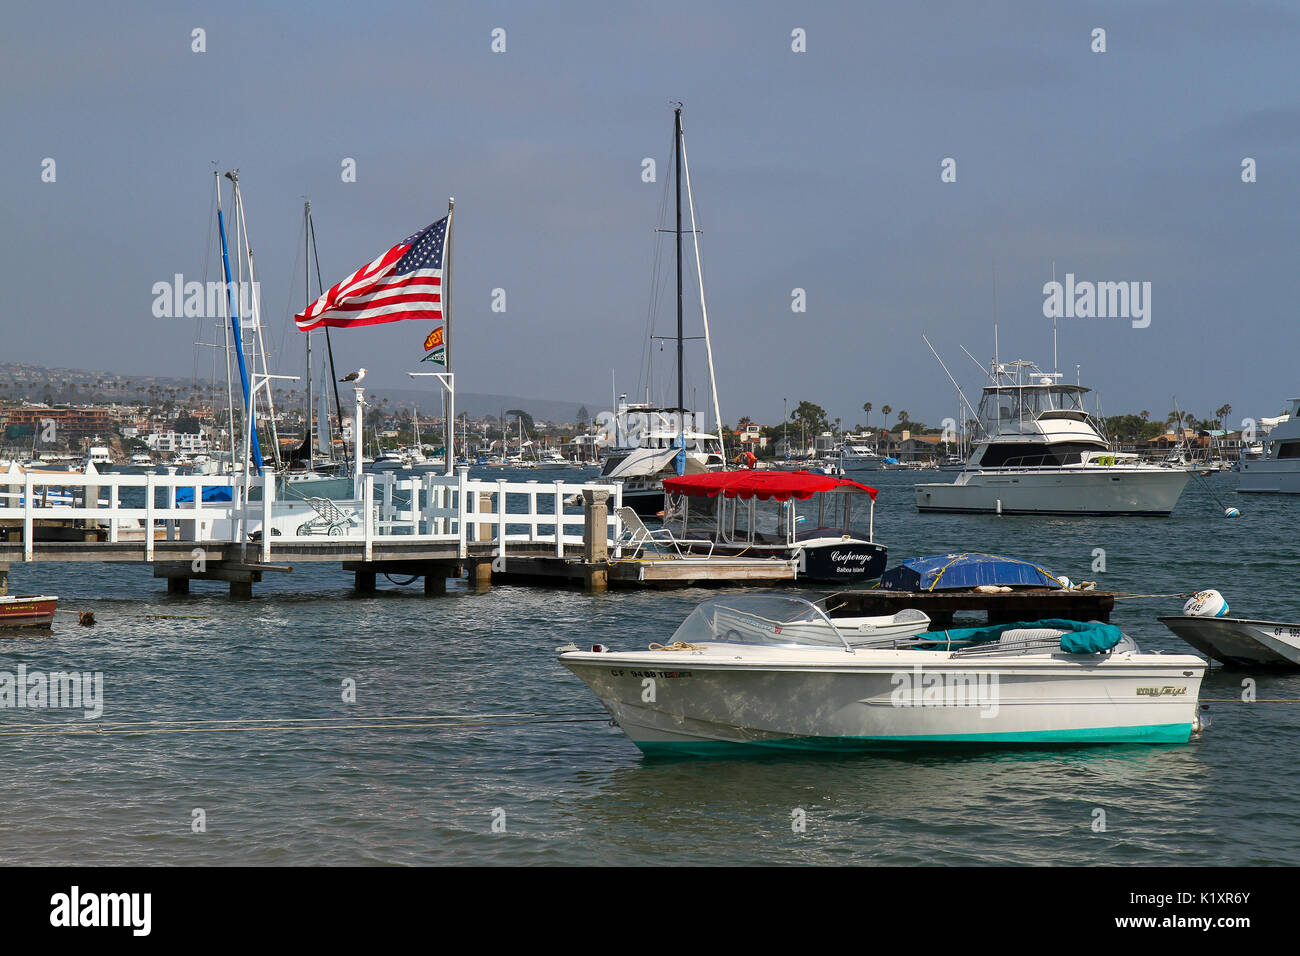 Boats docked near Balboa Island, Newport Beach, Orange County, California, United States. Editorial use only. Stock Photo